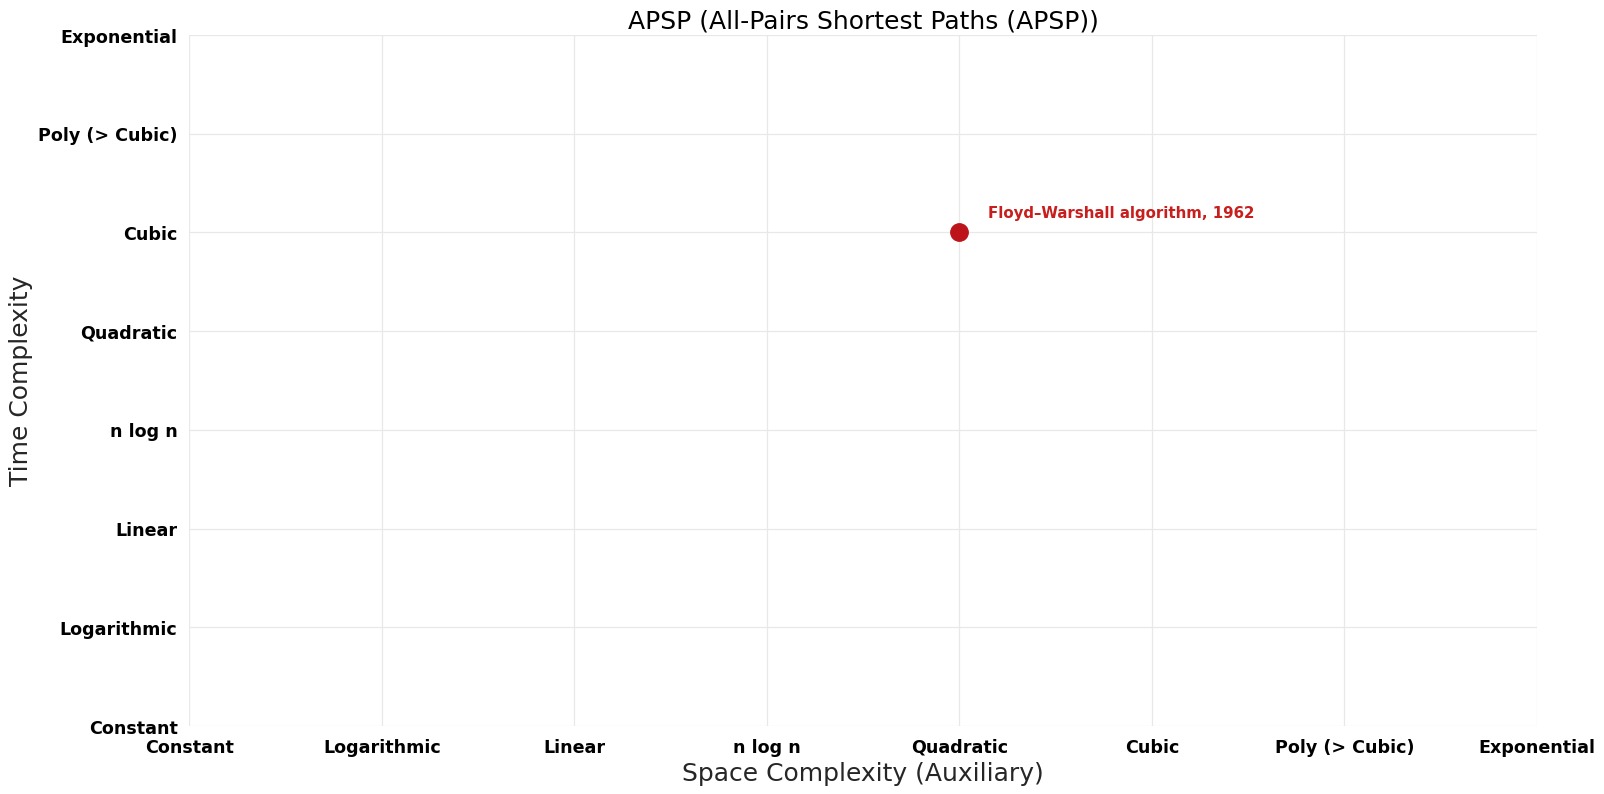 File:All-Pairs Shortest Paths (APSP) - APSP - Pareto Frontier.png